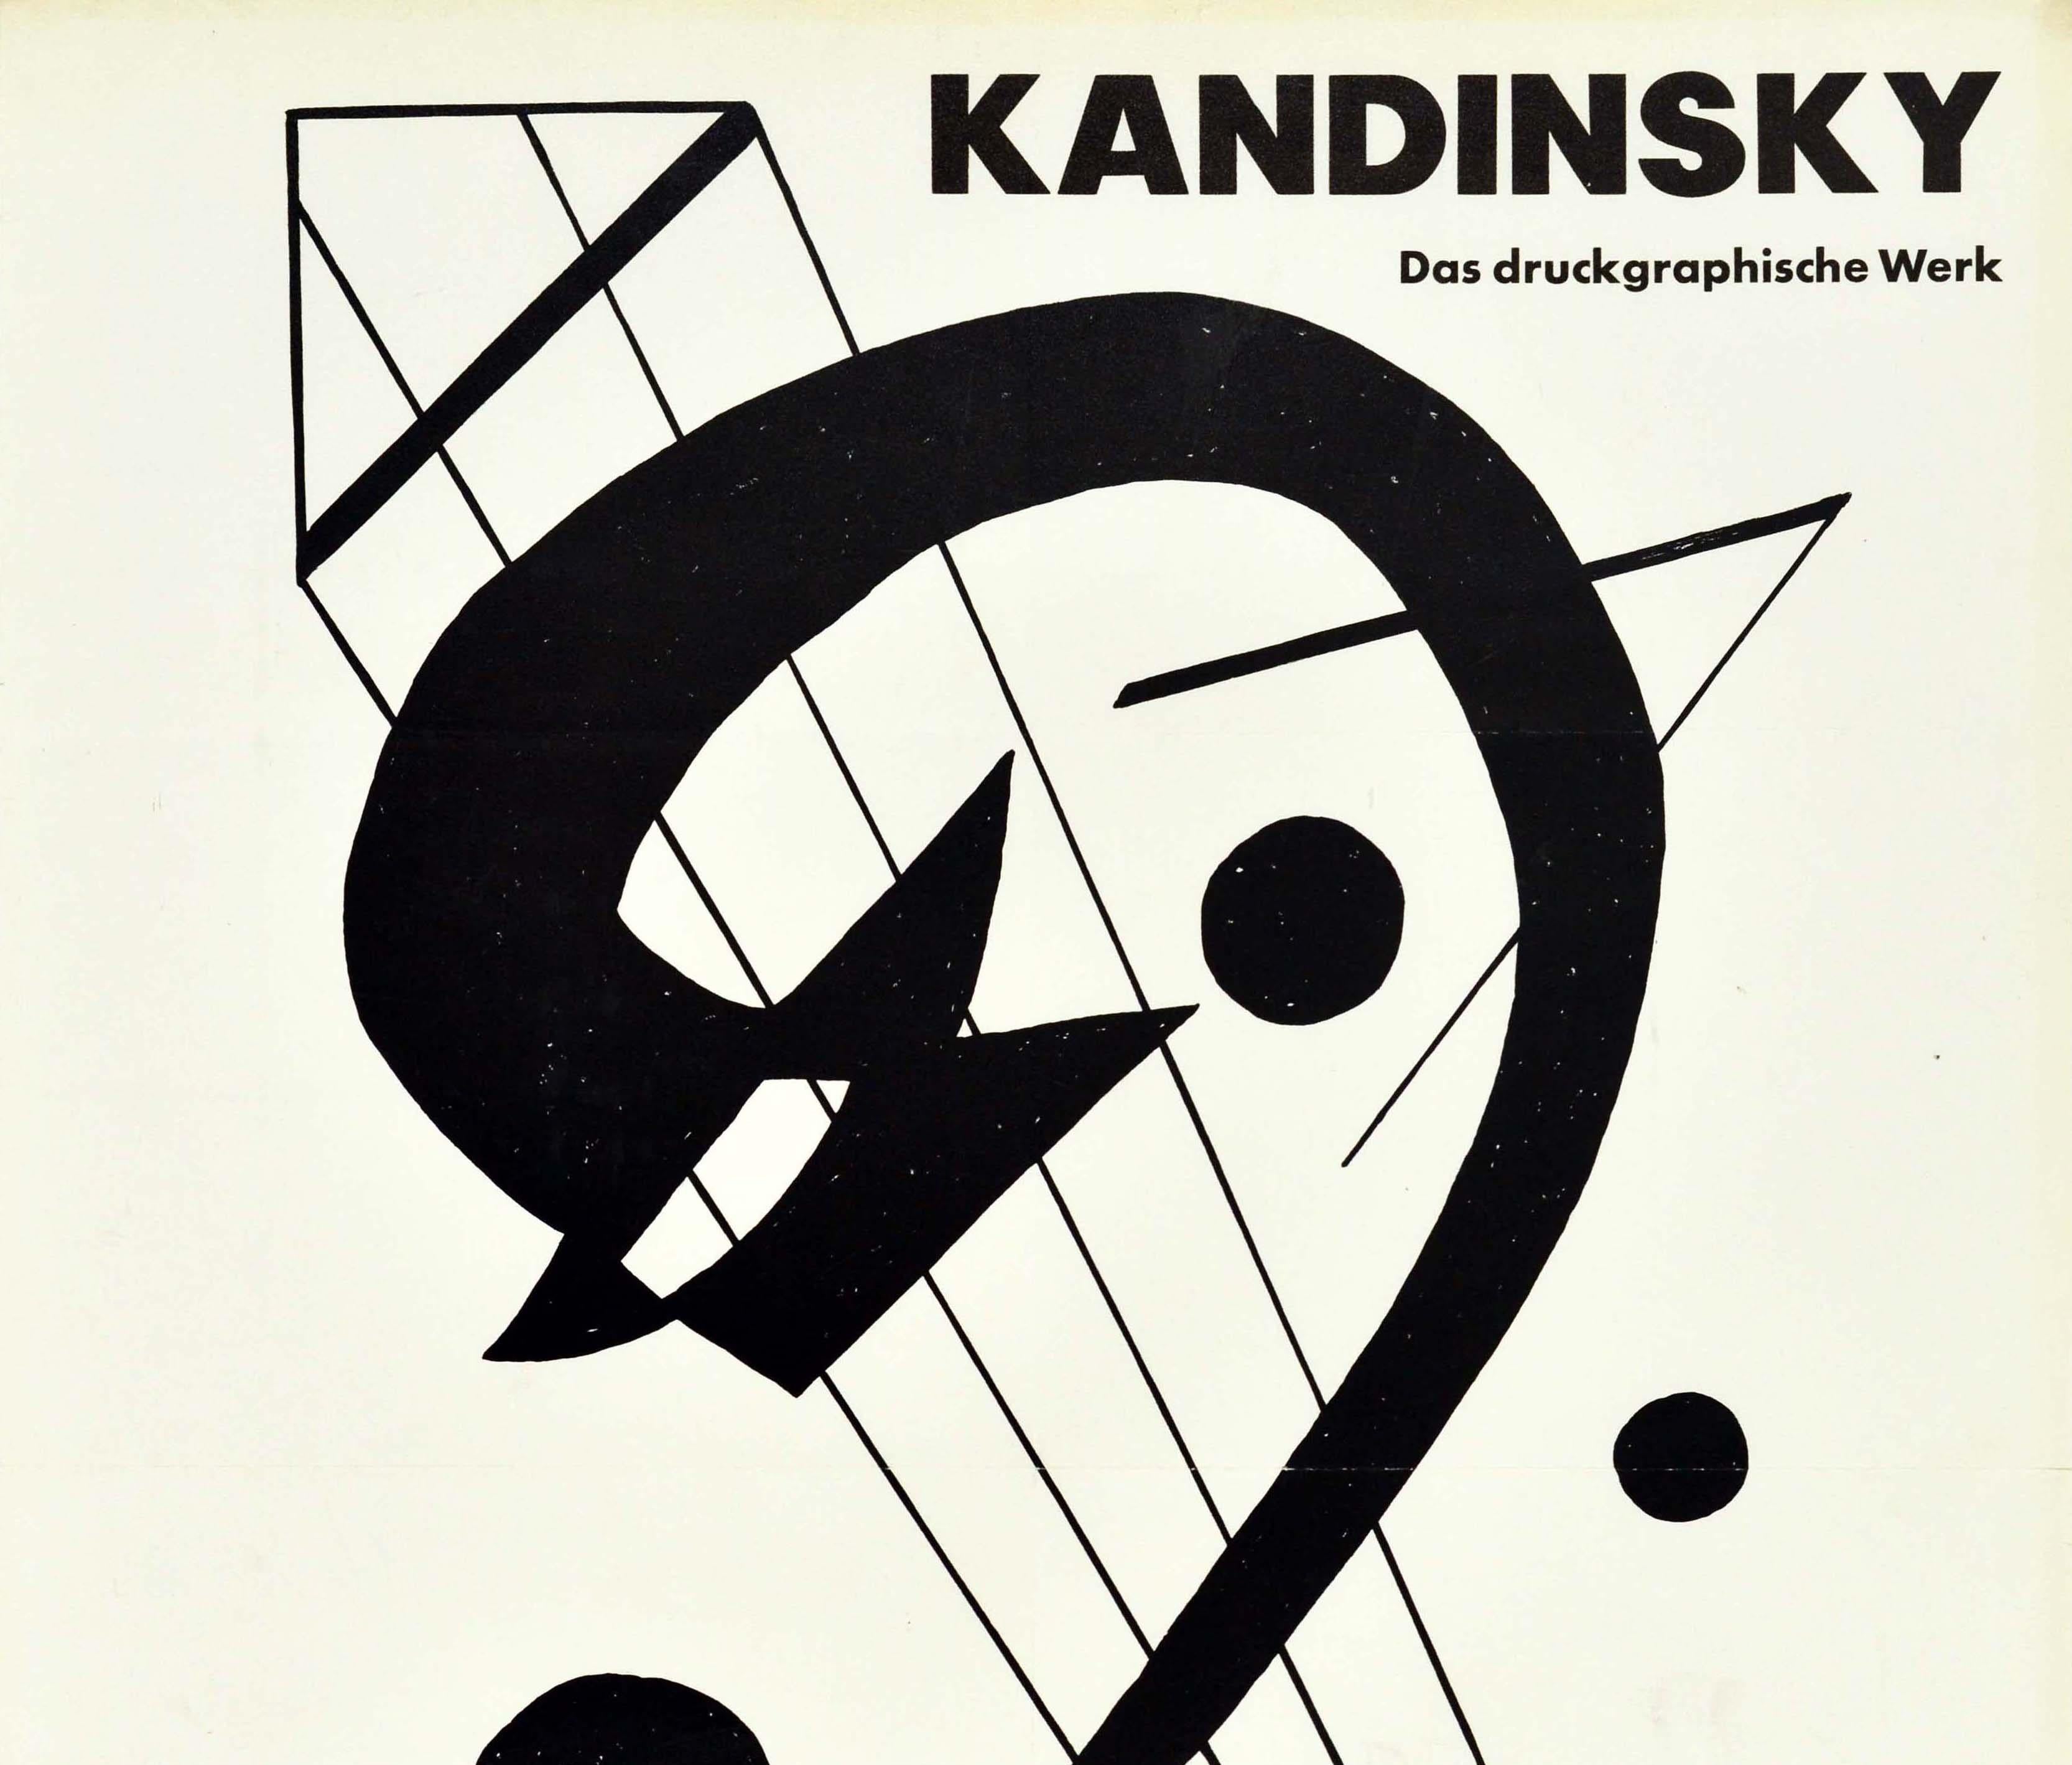 Original Vintage Poster Kandinsky Graphic Works Exhibition Munich Bauhaus Kites - Print by Wassily Kandinsky